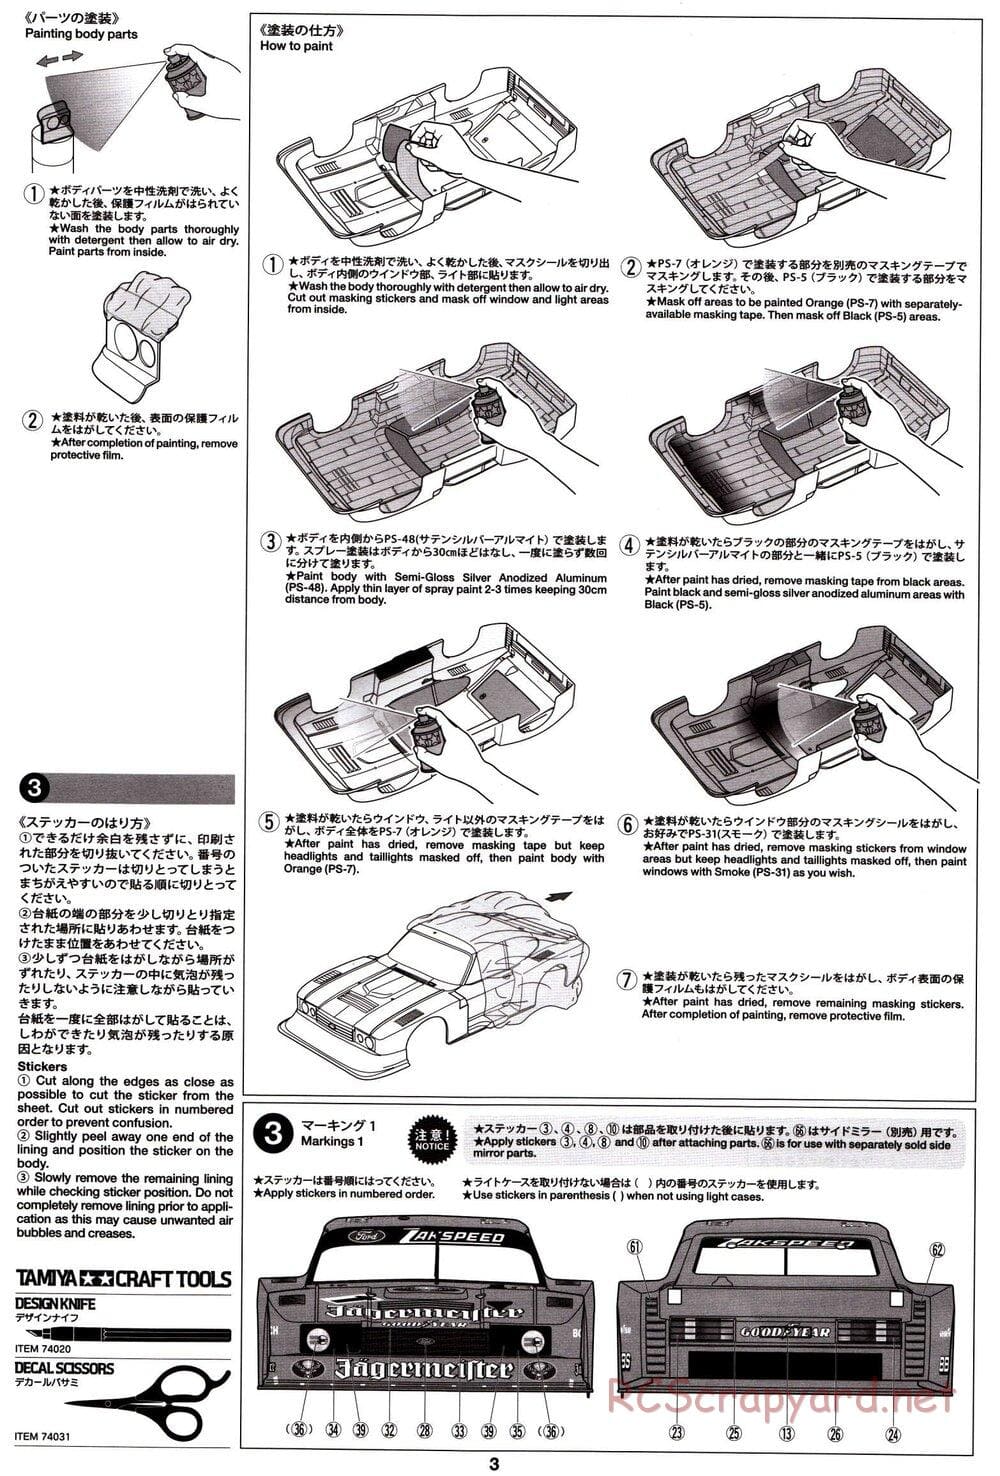 Tamiya - Zakspeed Jgermeister Ford Capri Turbo Gr.5 - TT-02 Chassis - Body Manual - Page 3